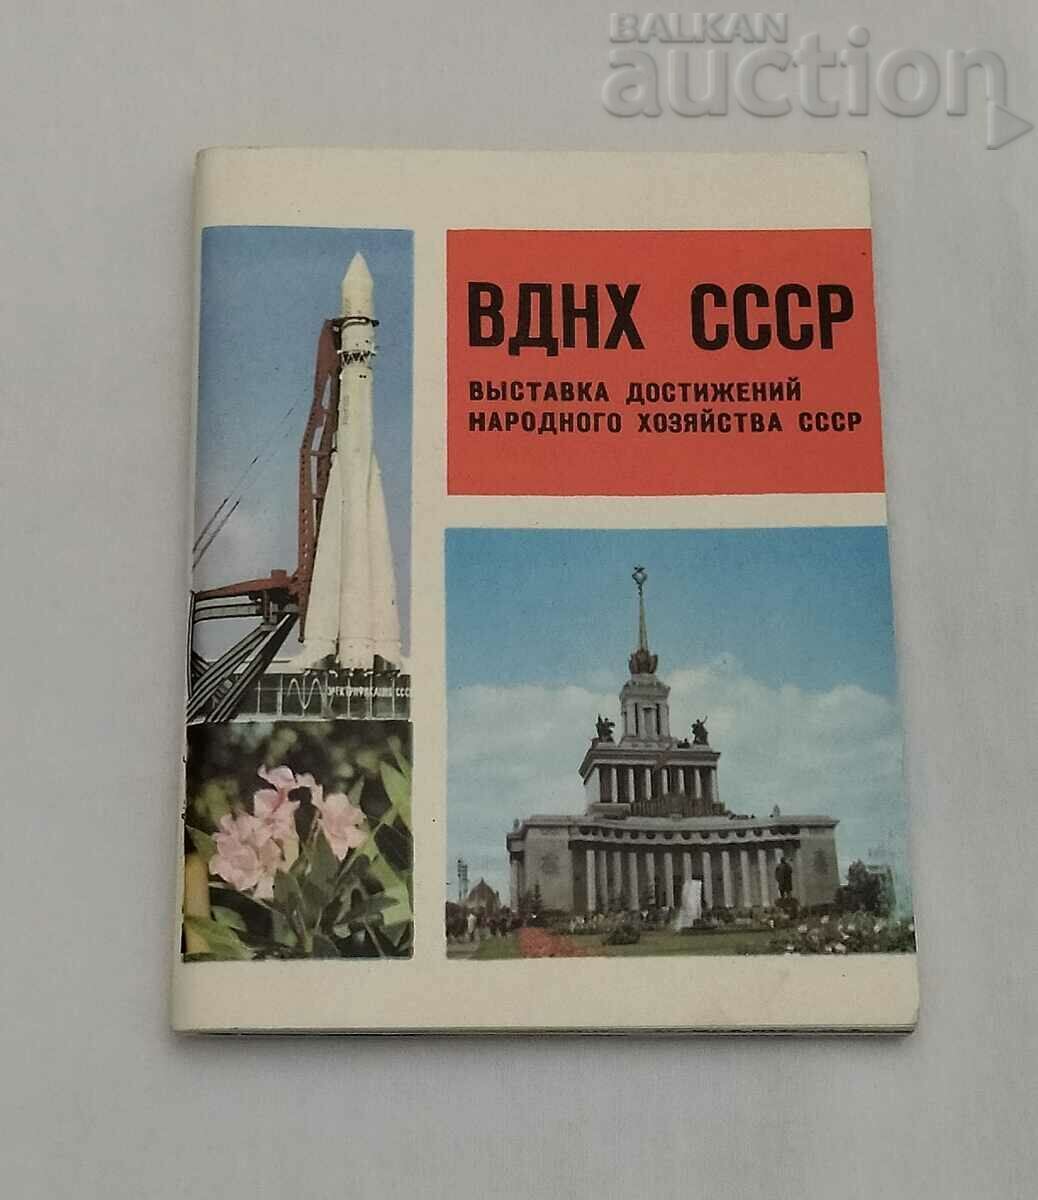 EXPOSIȚIA VDNH ALBUM URSS 1970